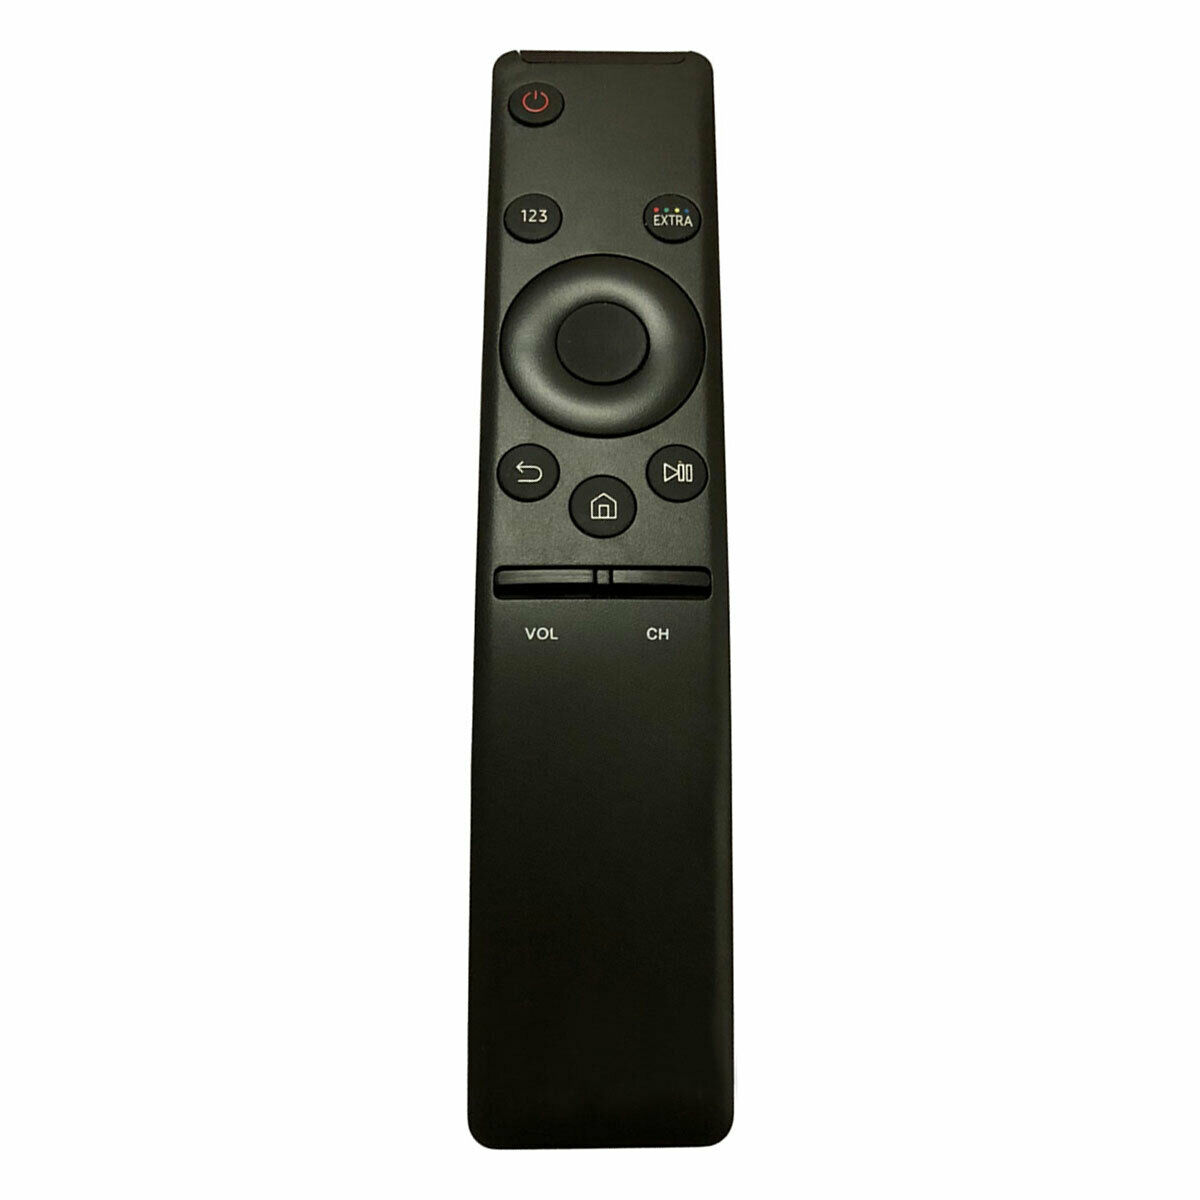 Replacement TV Remote Control for Samsung UN78KU7500FXZA Television Brand: universal Type: Remote Control - TV Mode